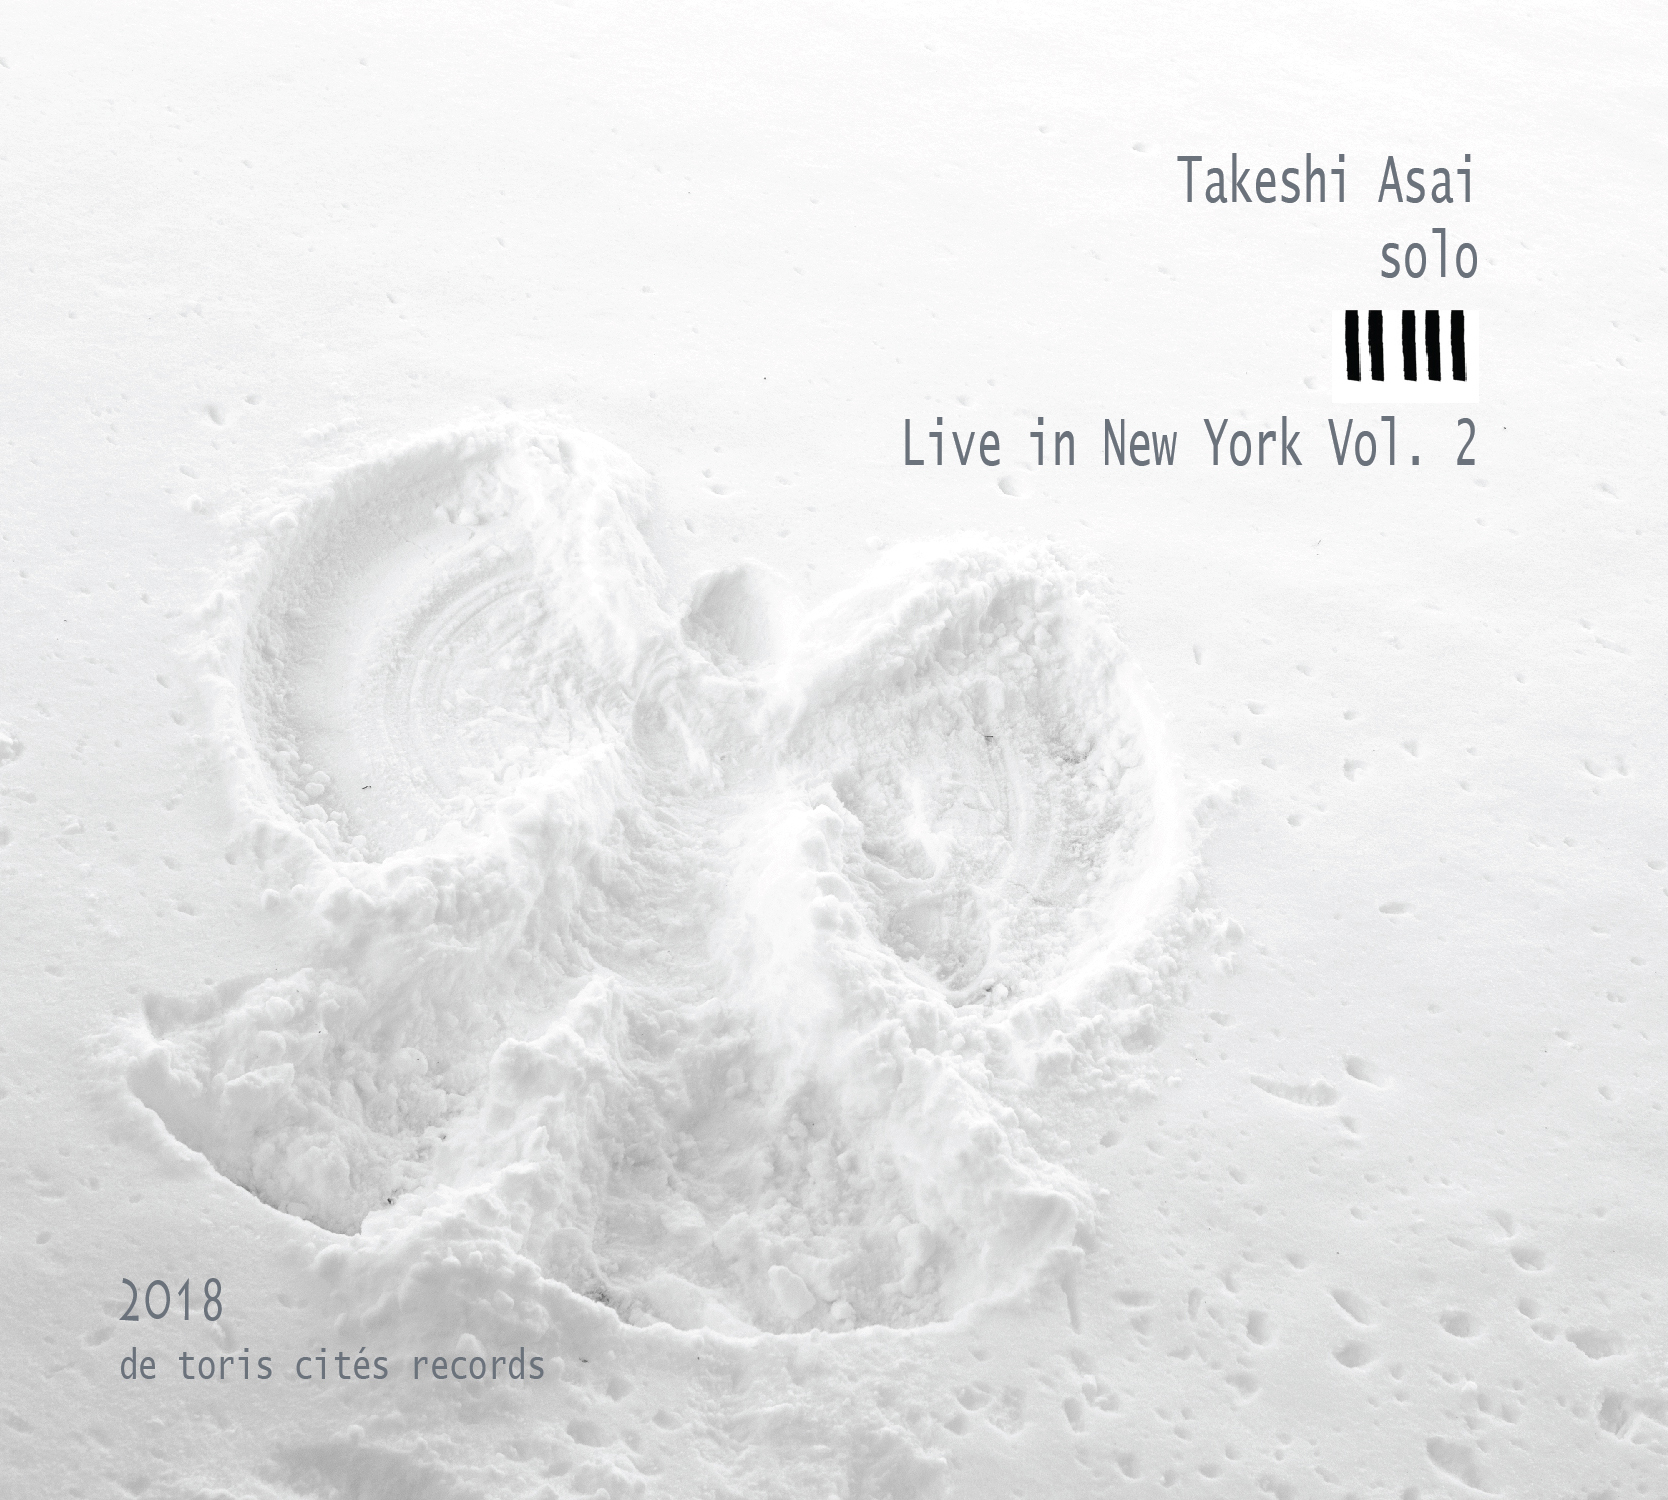 TAKESHI ASAI - Solo : Live in New York Vol. 2 cover 